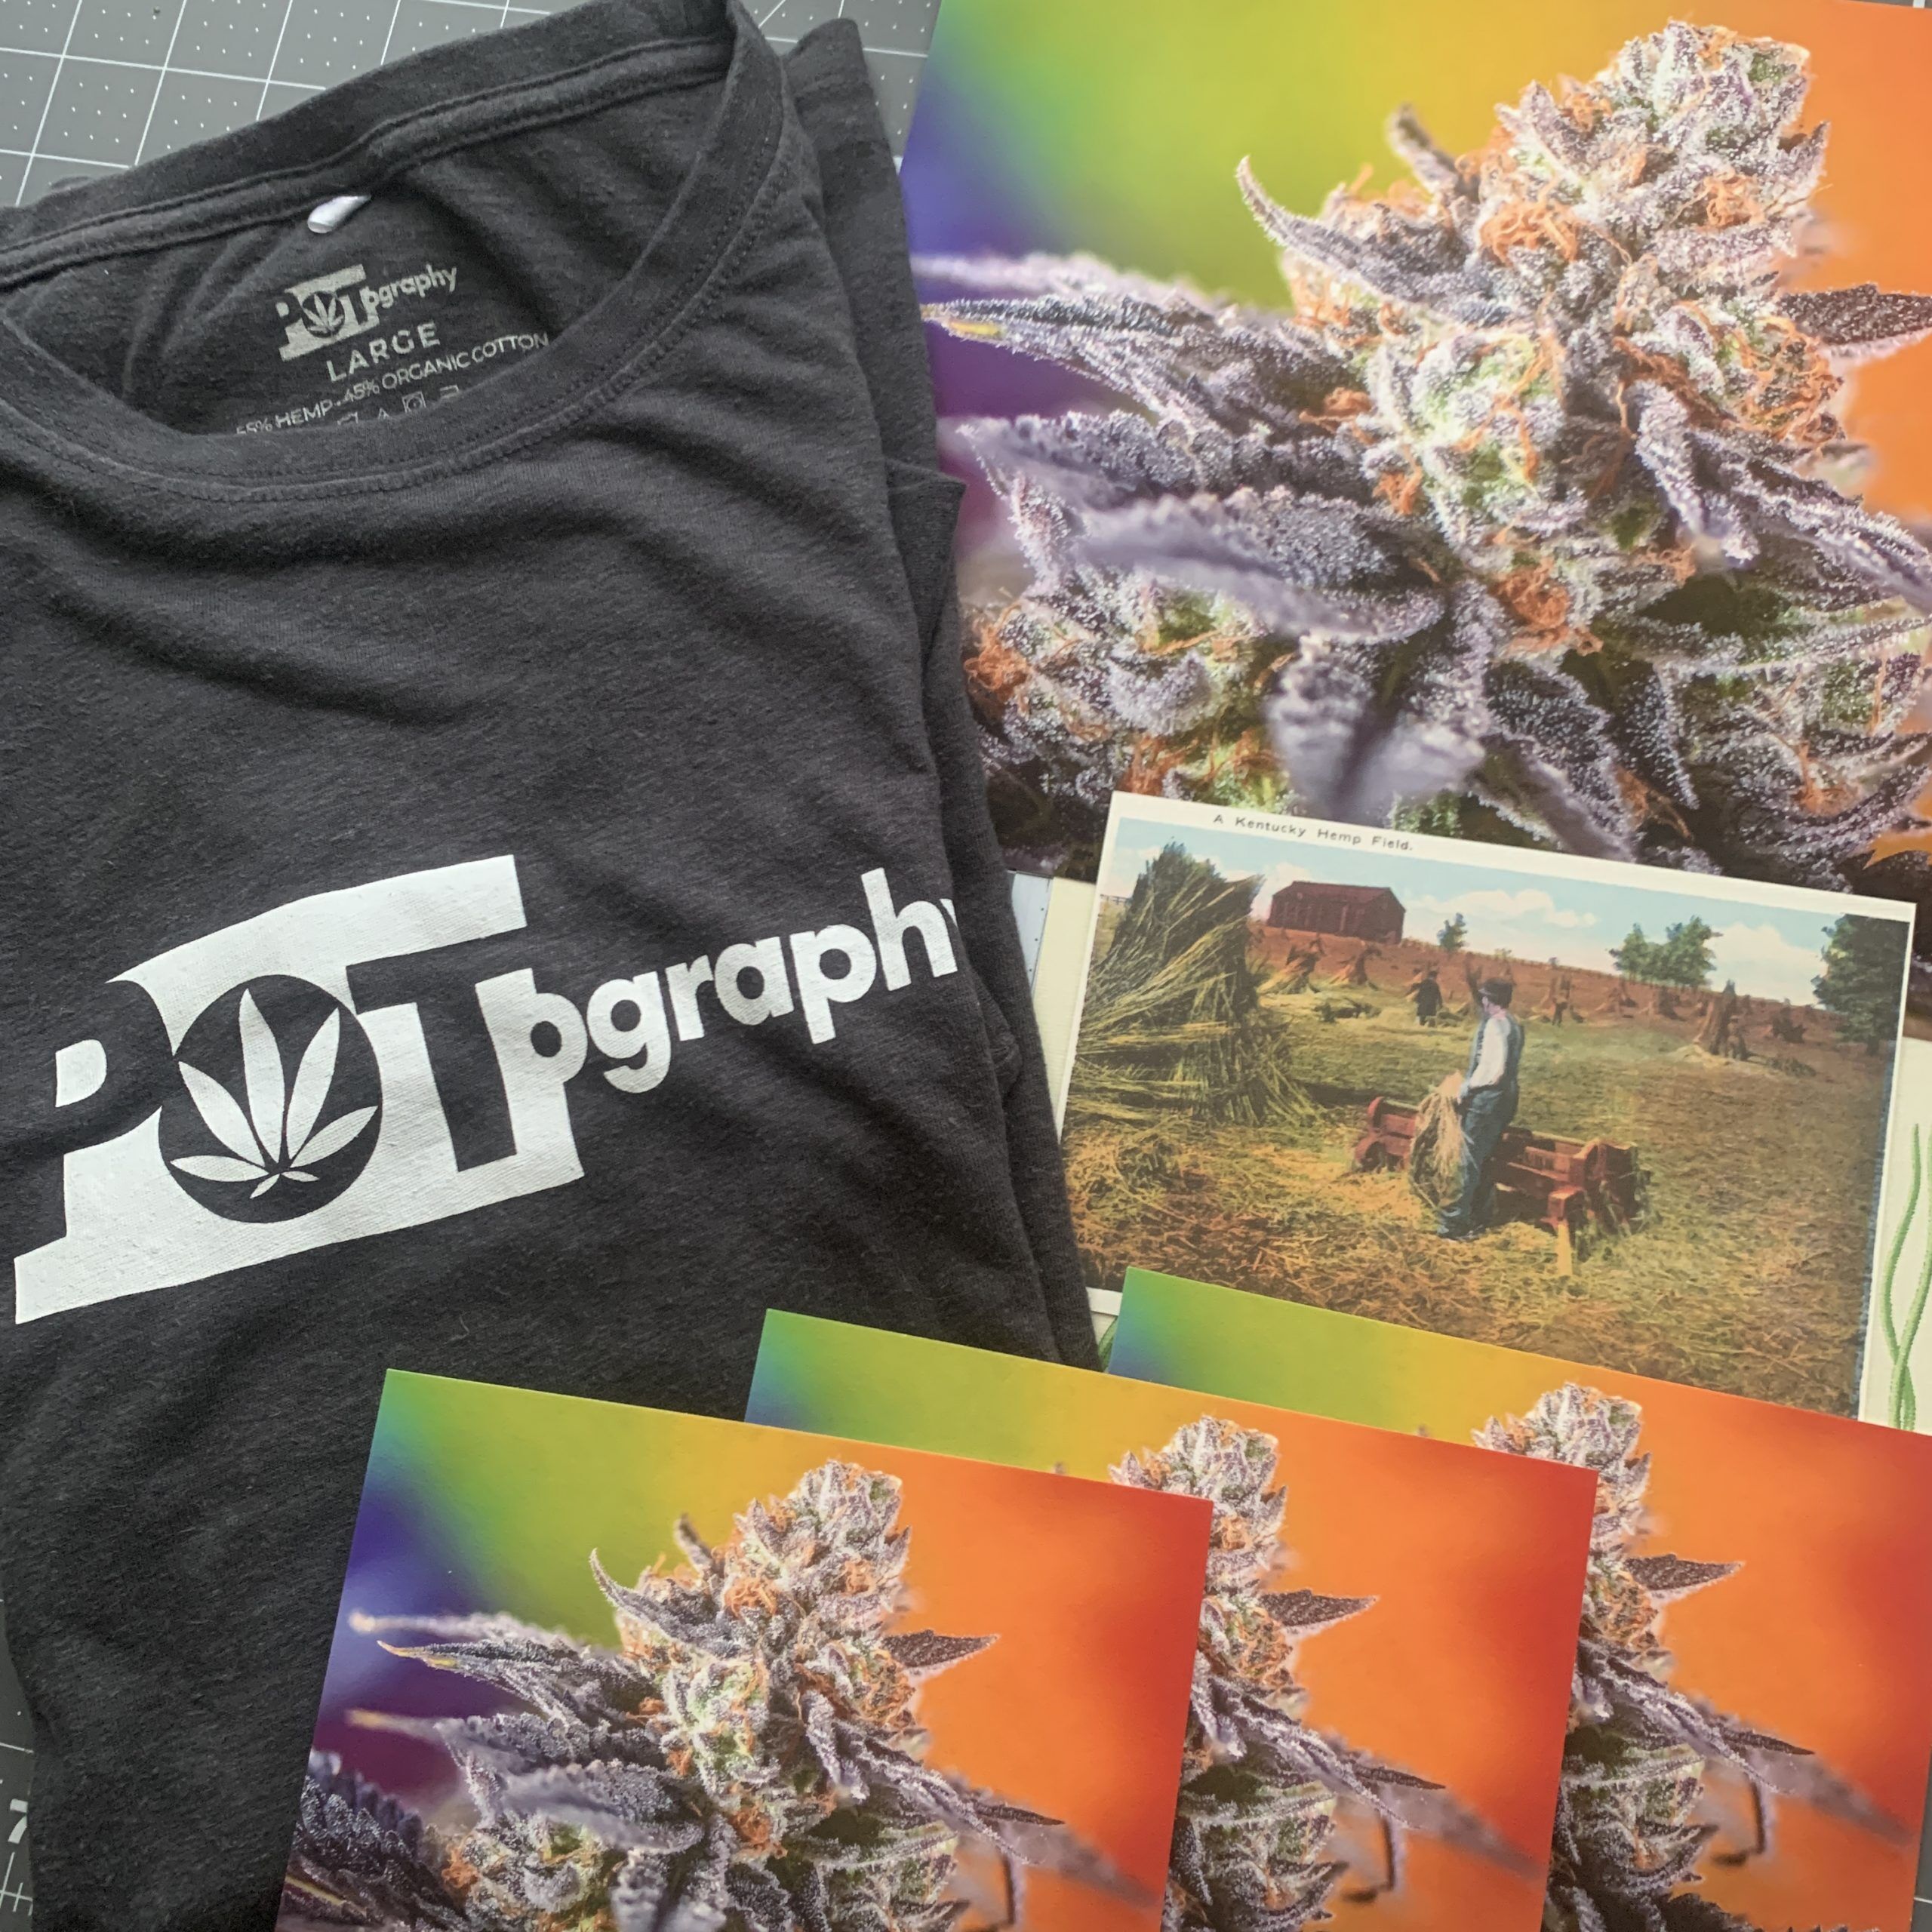 cannabis photography, photo contest rules, hemp prints, rules and prizes -may photo contest hemp prize pack